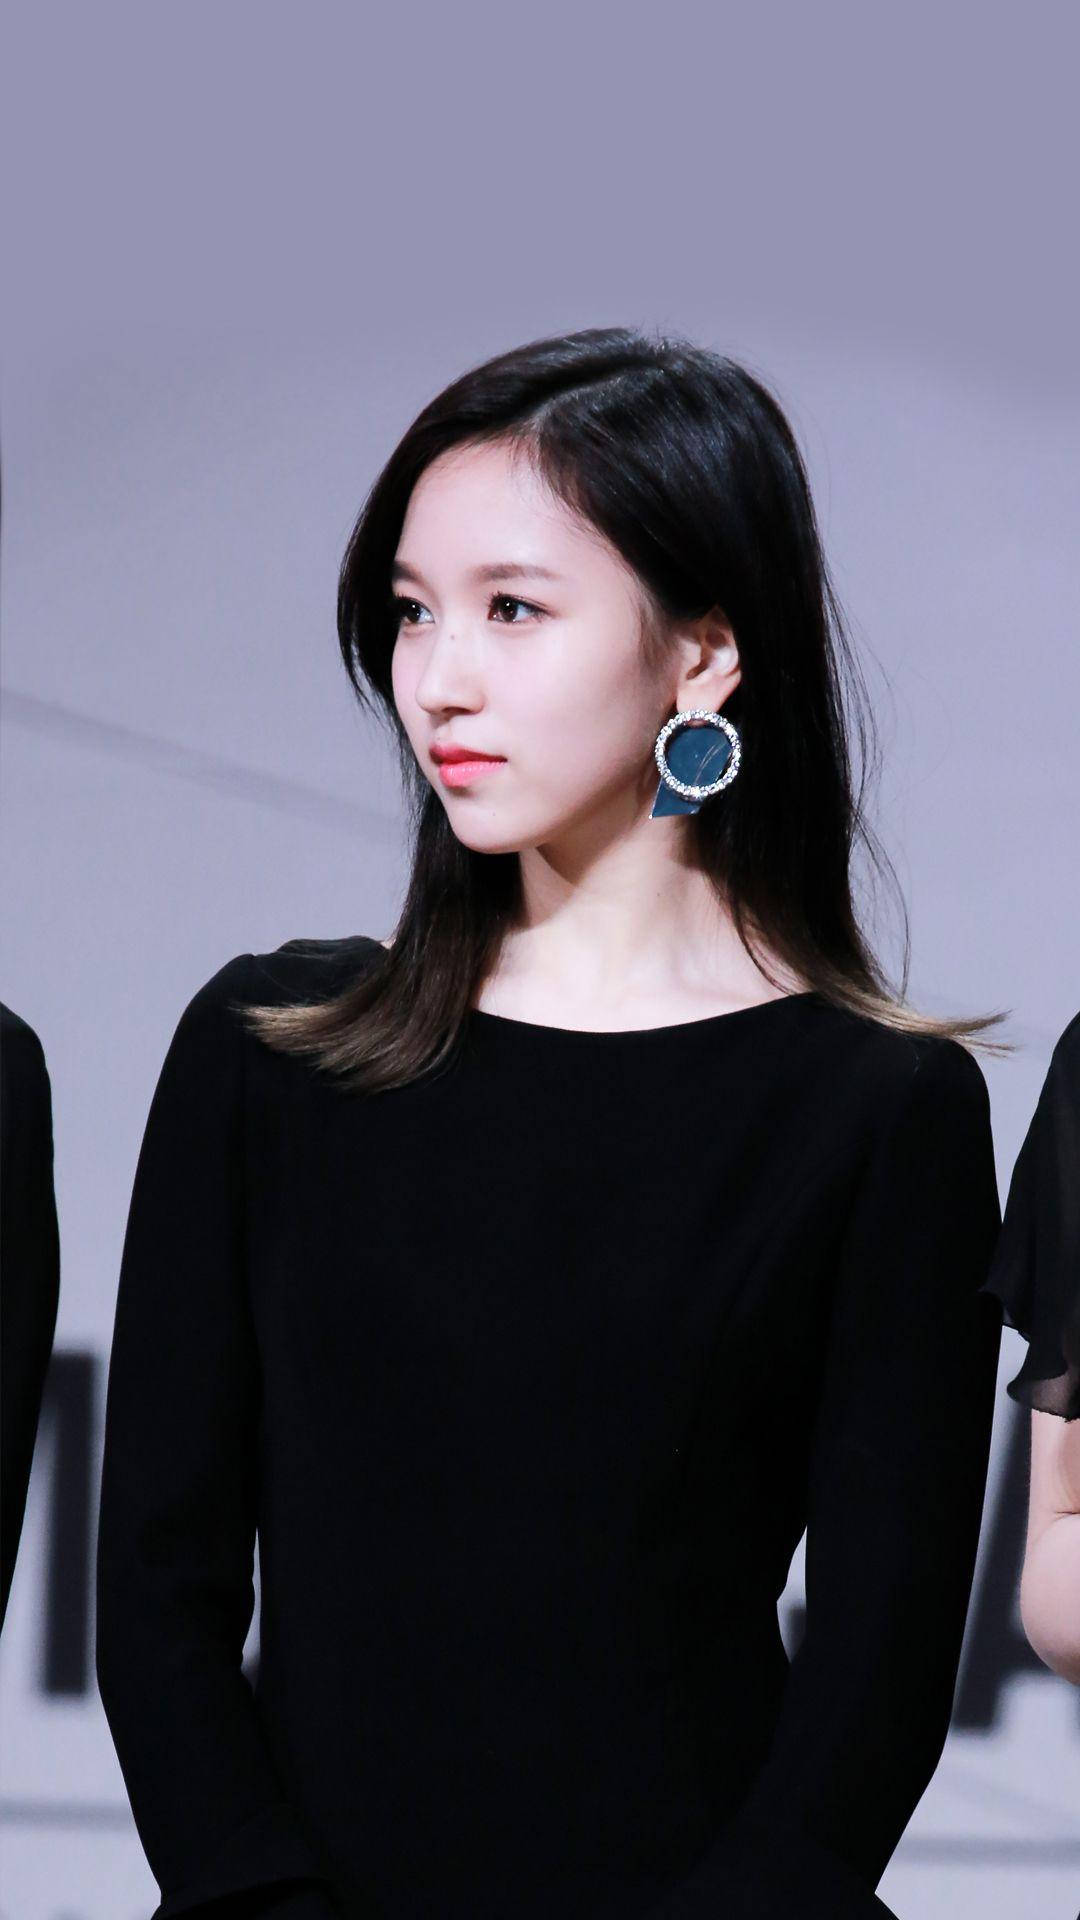 Download Twice Member Mina In Black Dress Wallpaper